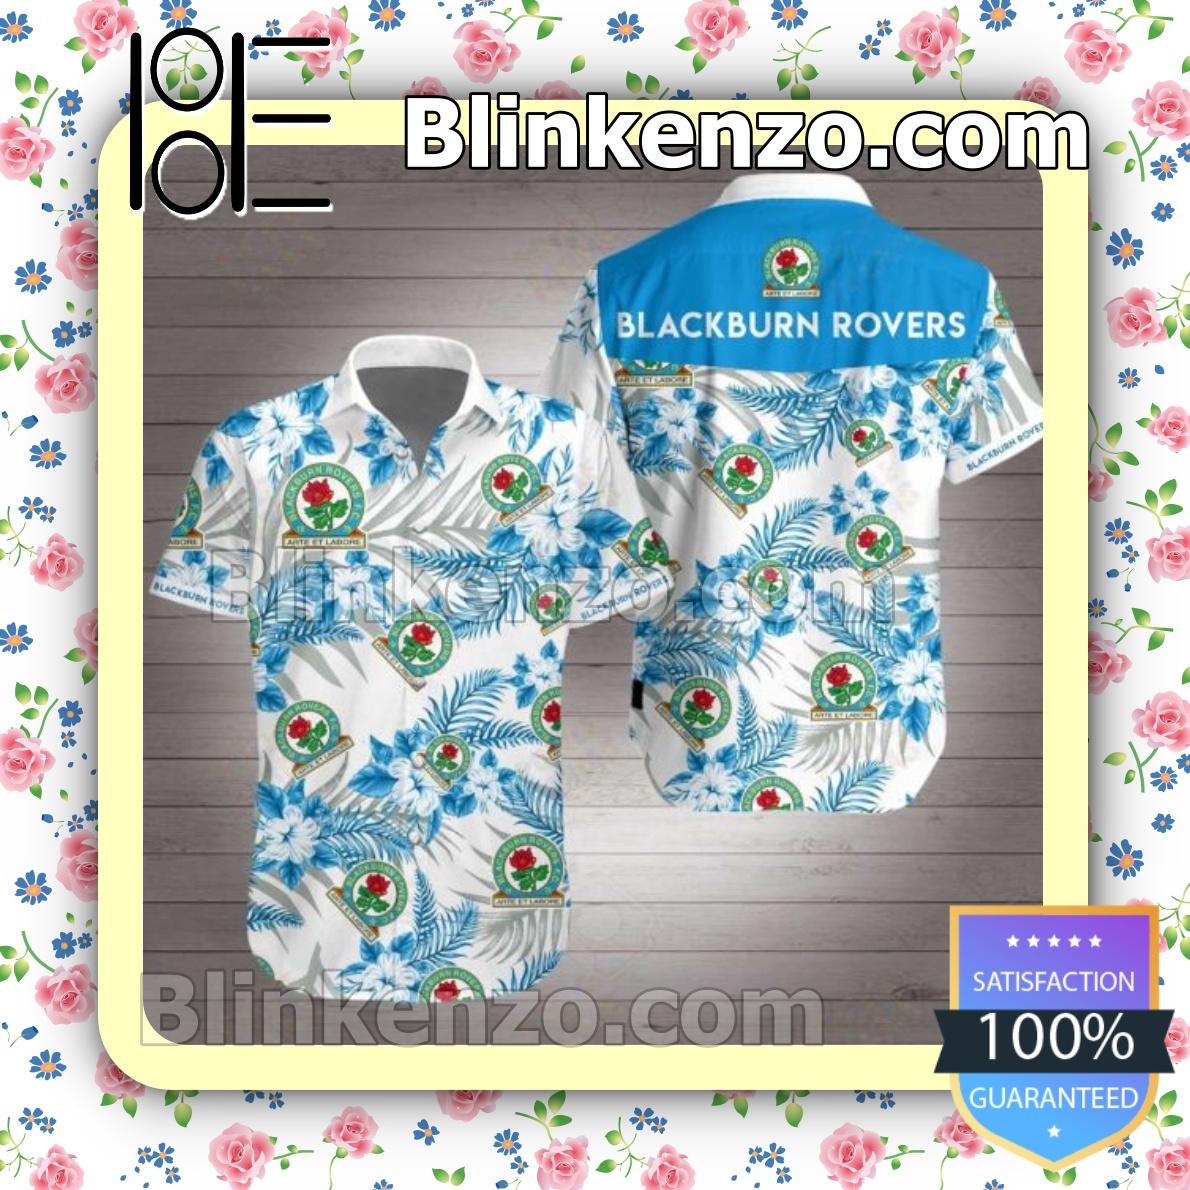 Print On Demand Blackburn Rovers Blue Tropical Floral White Summer Shirts